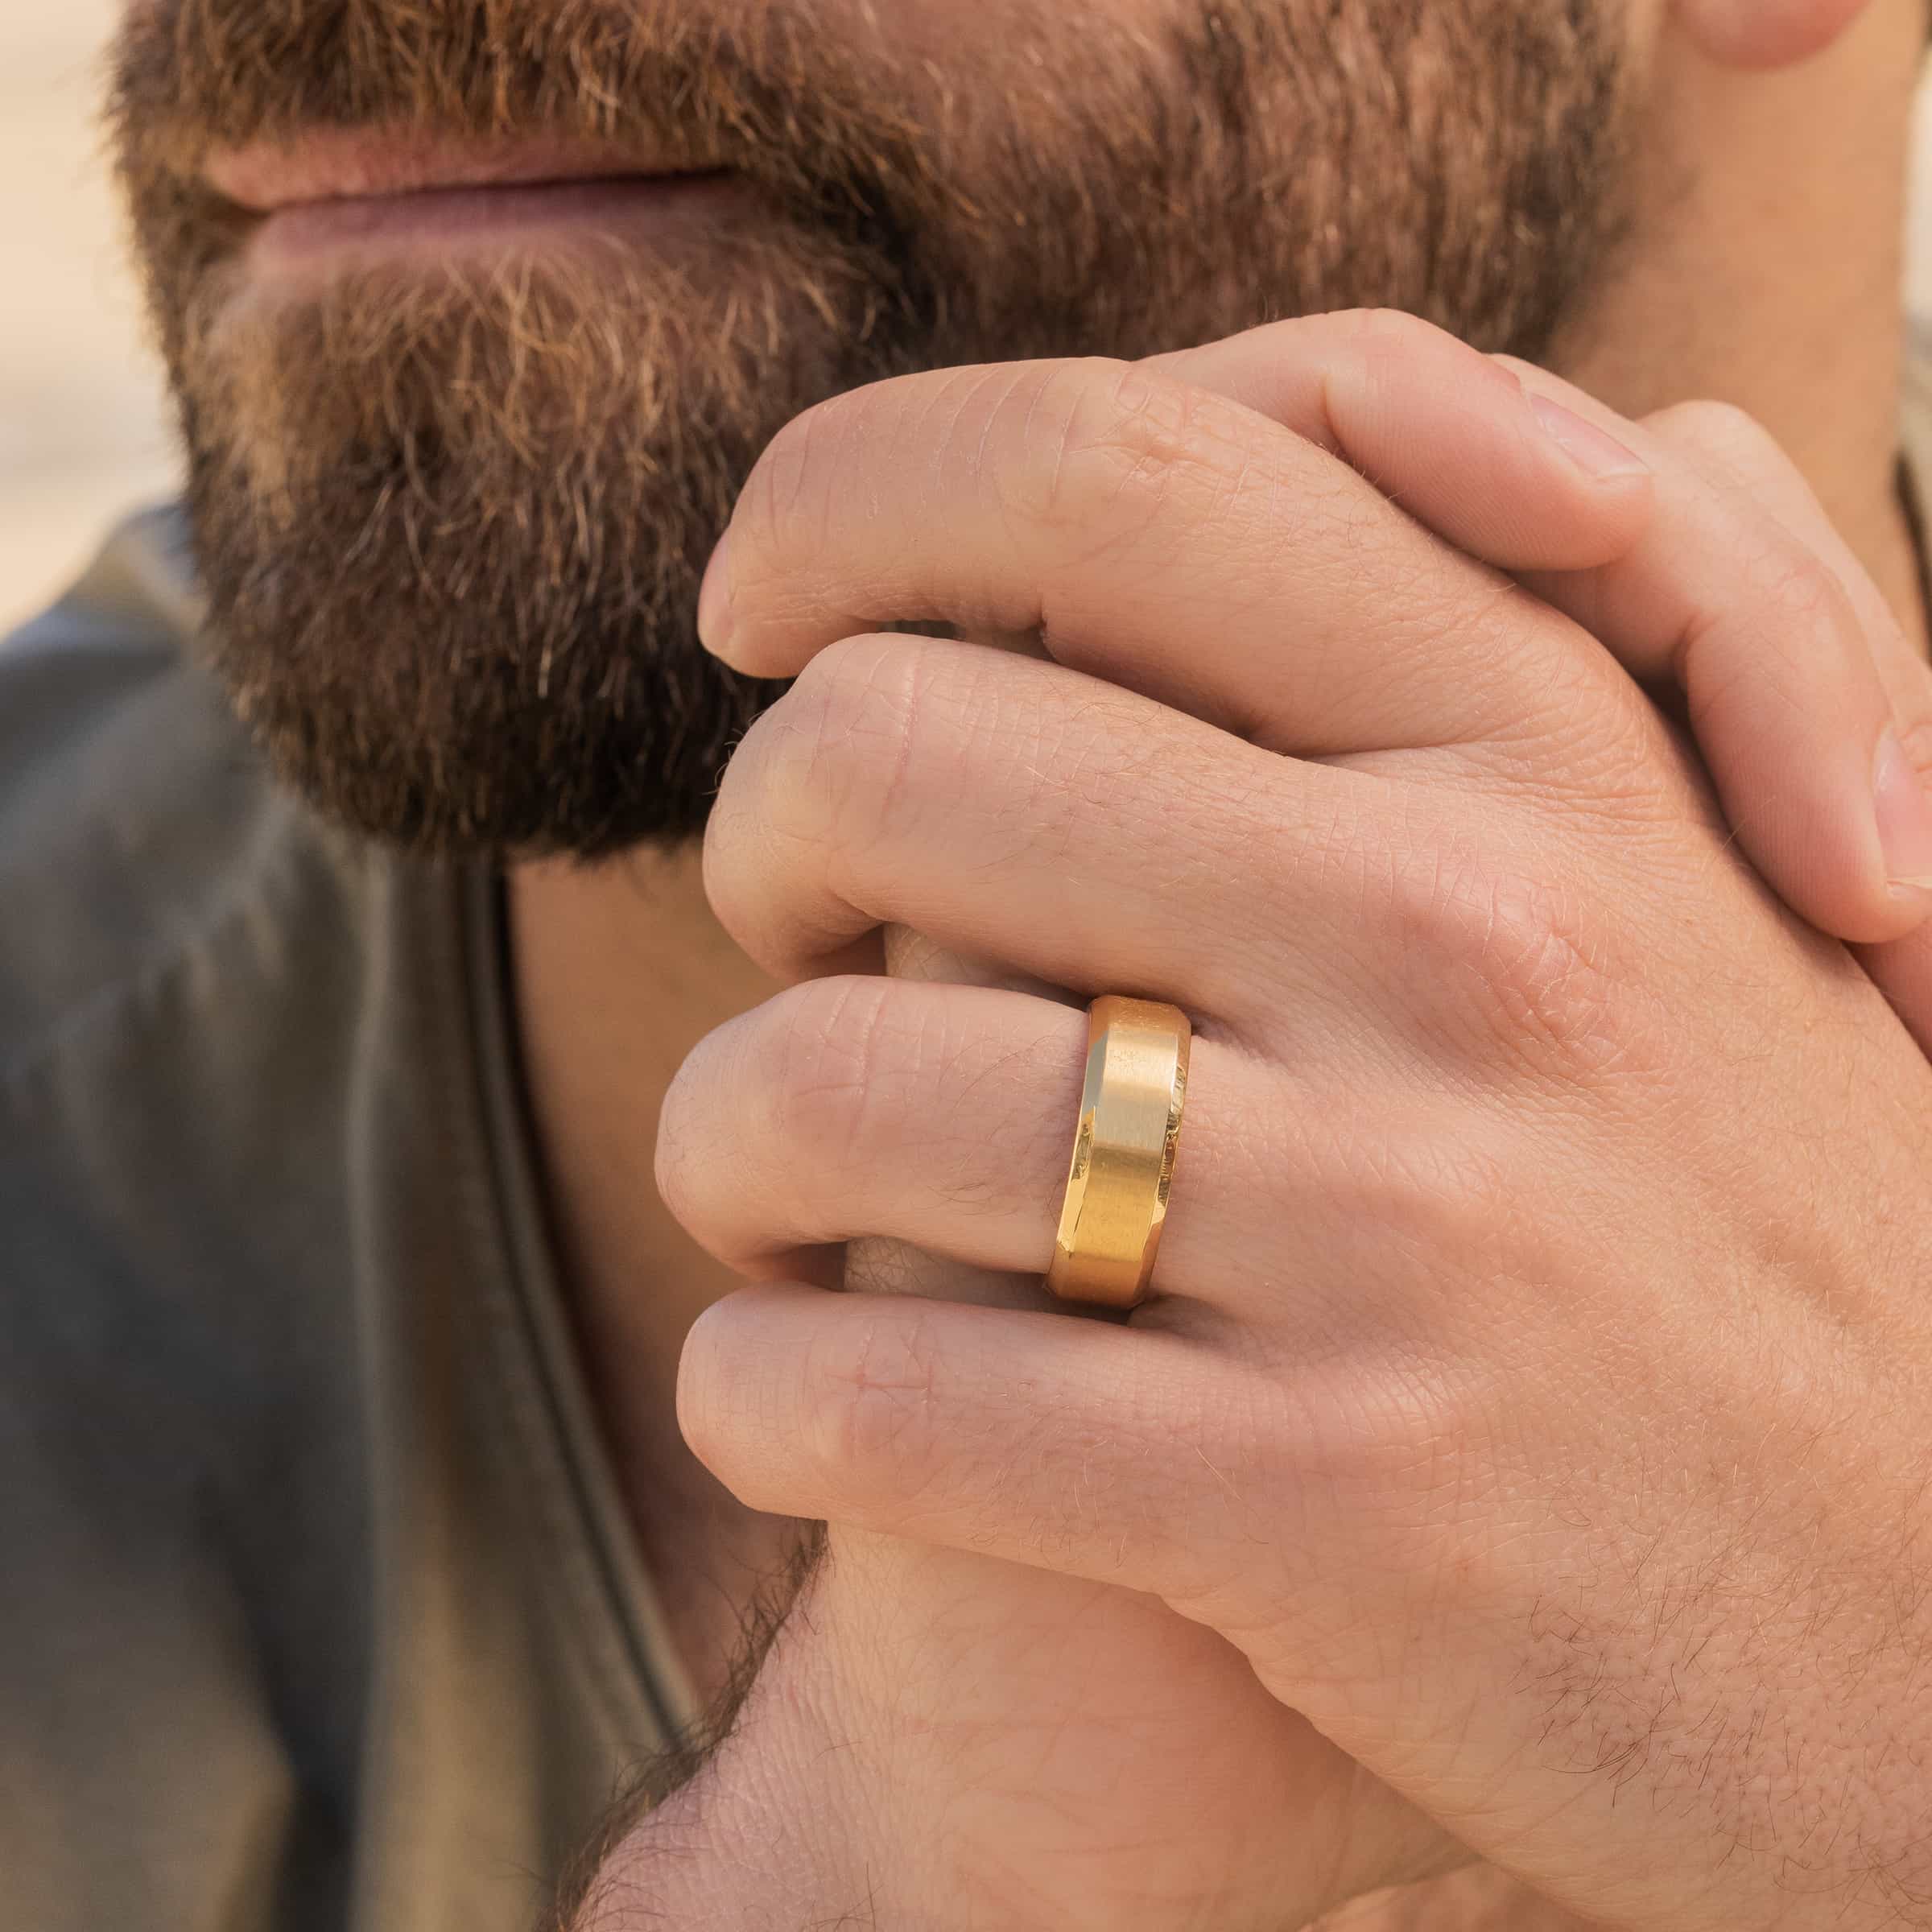 Male Wedding Rings On Finger | manonthelam.com